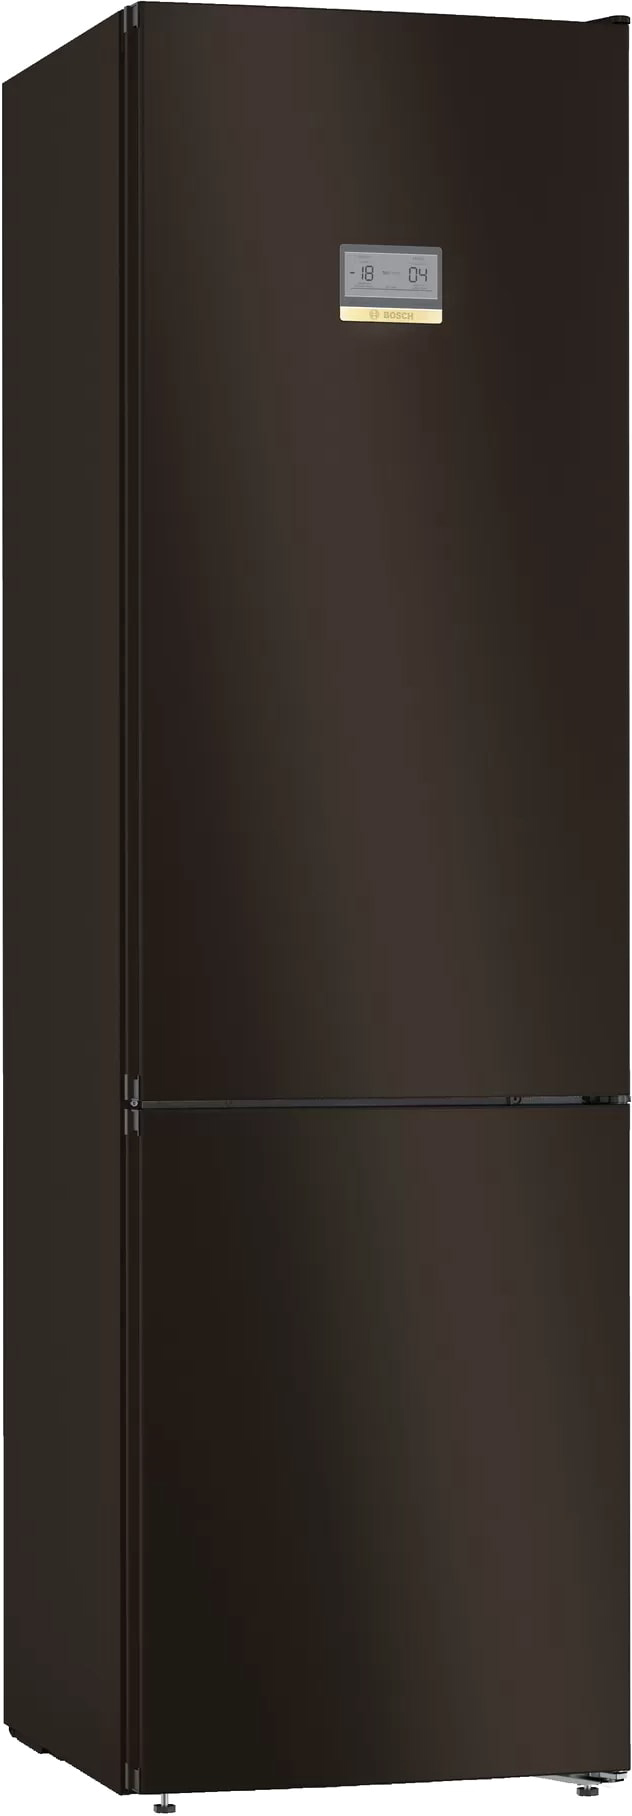 Двухкамерный холодильник BOSCH KGN39AD31R